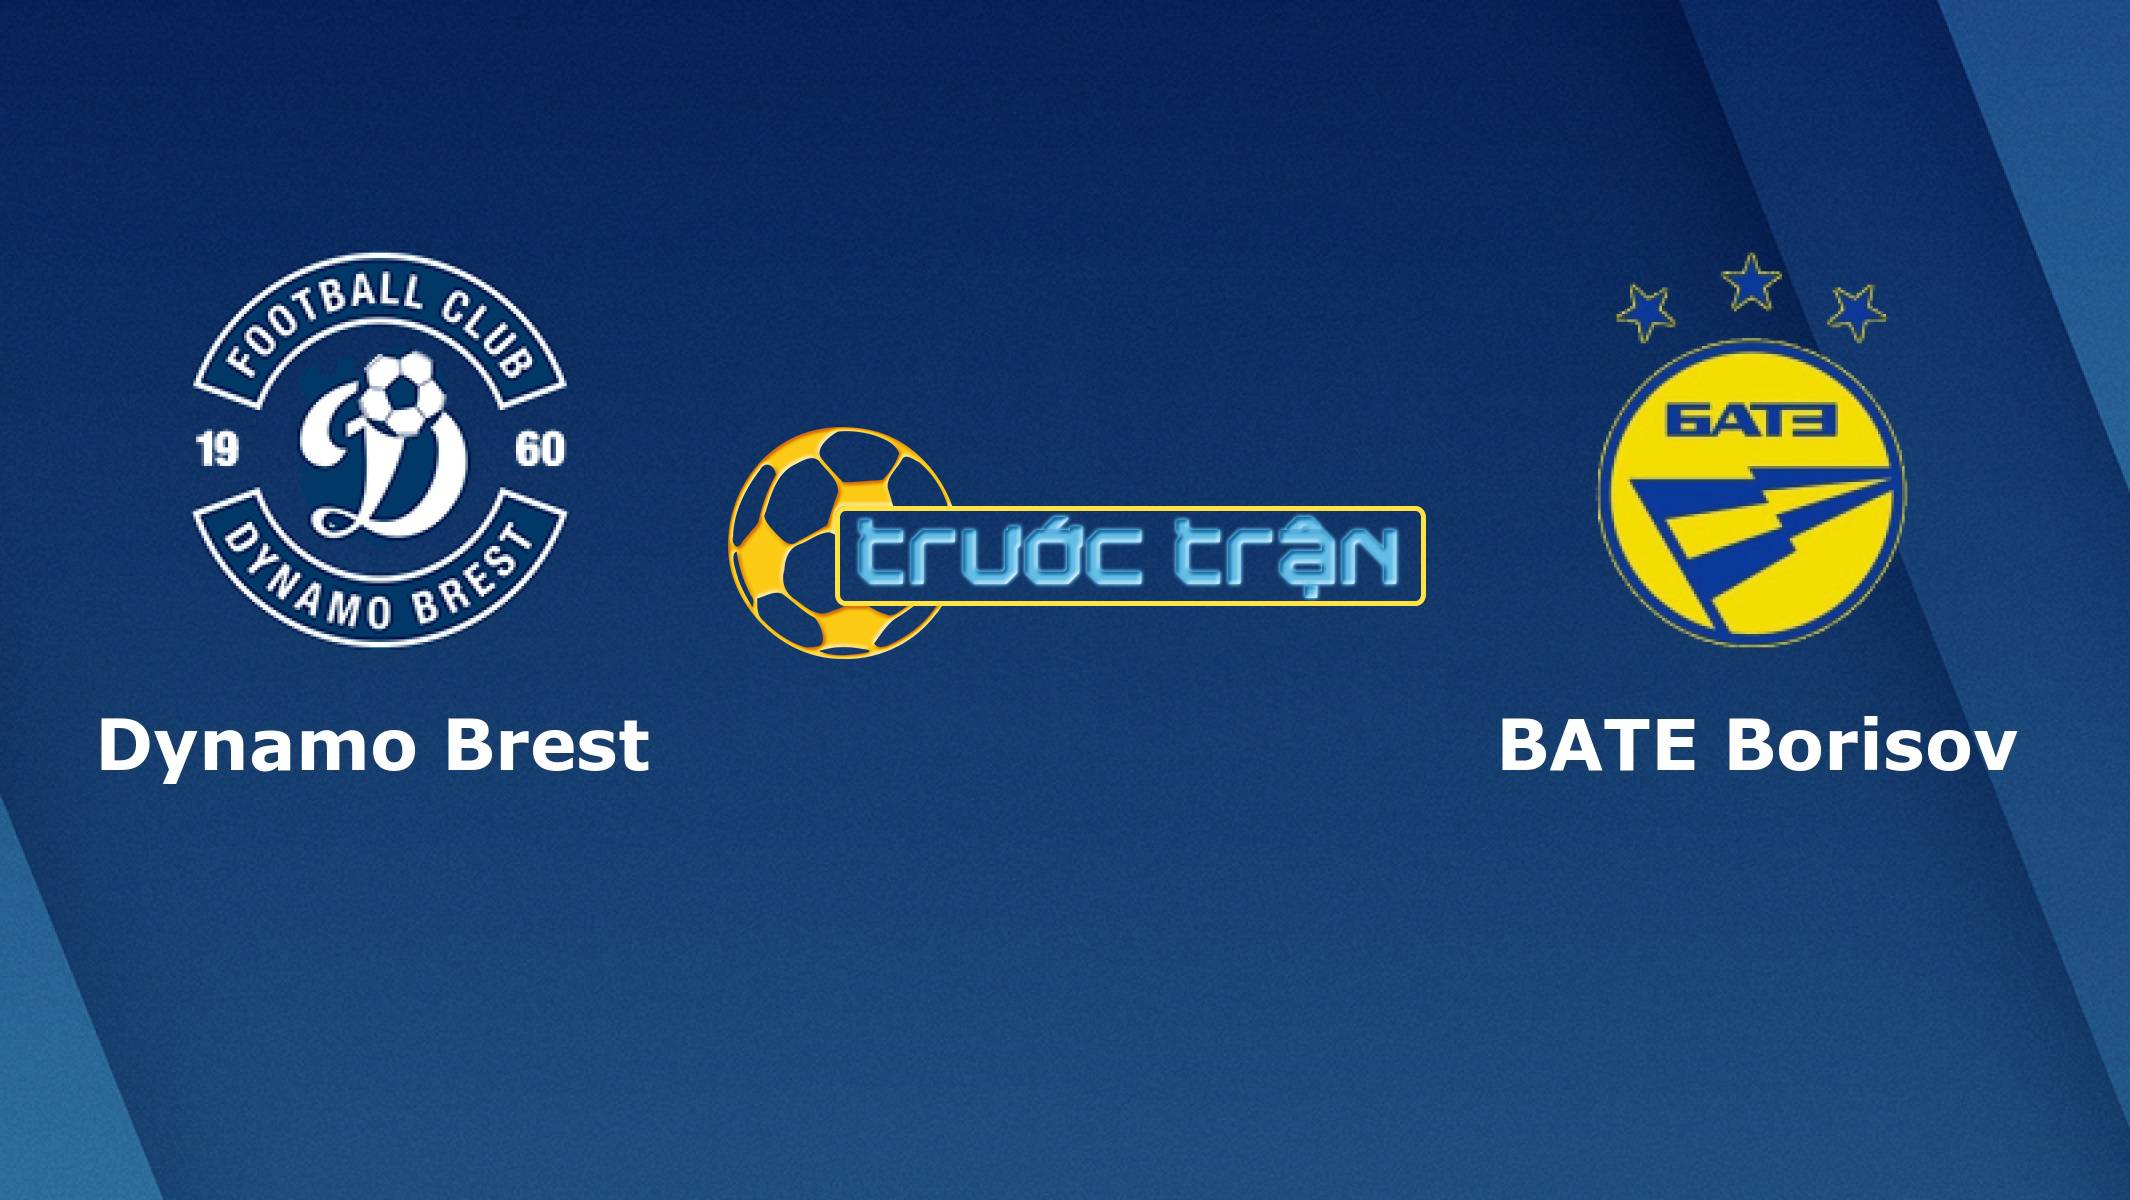 Dinamo Brest vs BATE Borisov – Tip kèo bóng đá hôm nay – 20/05